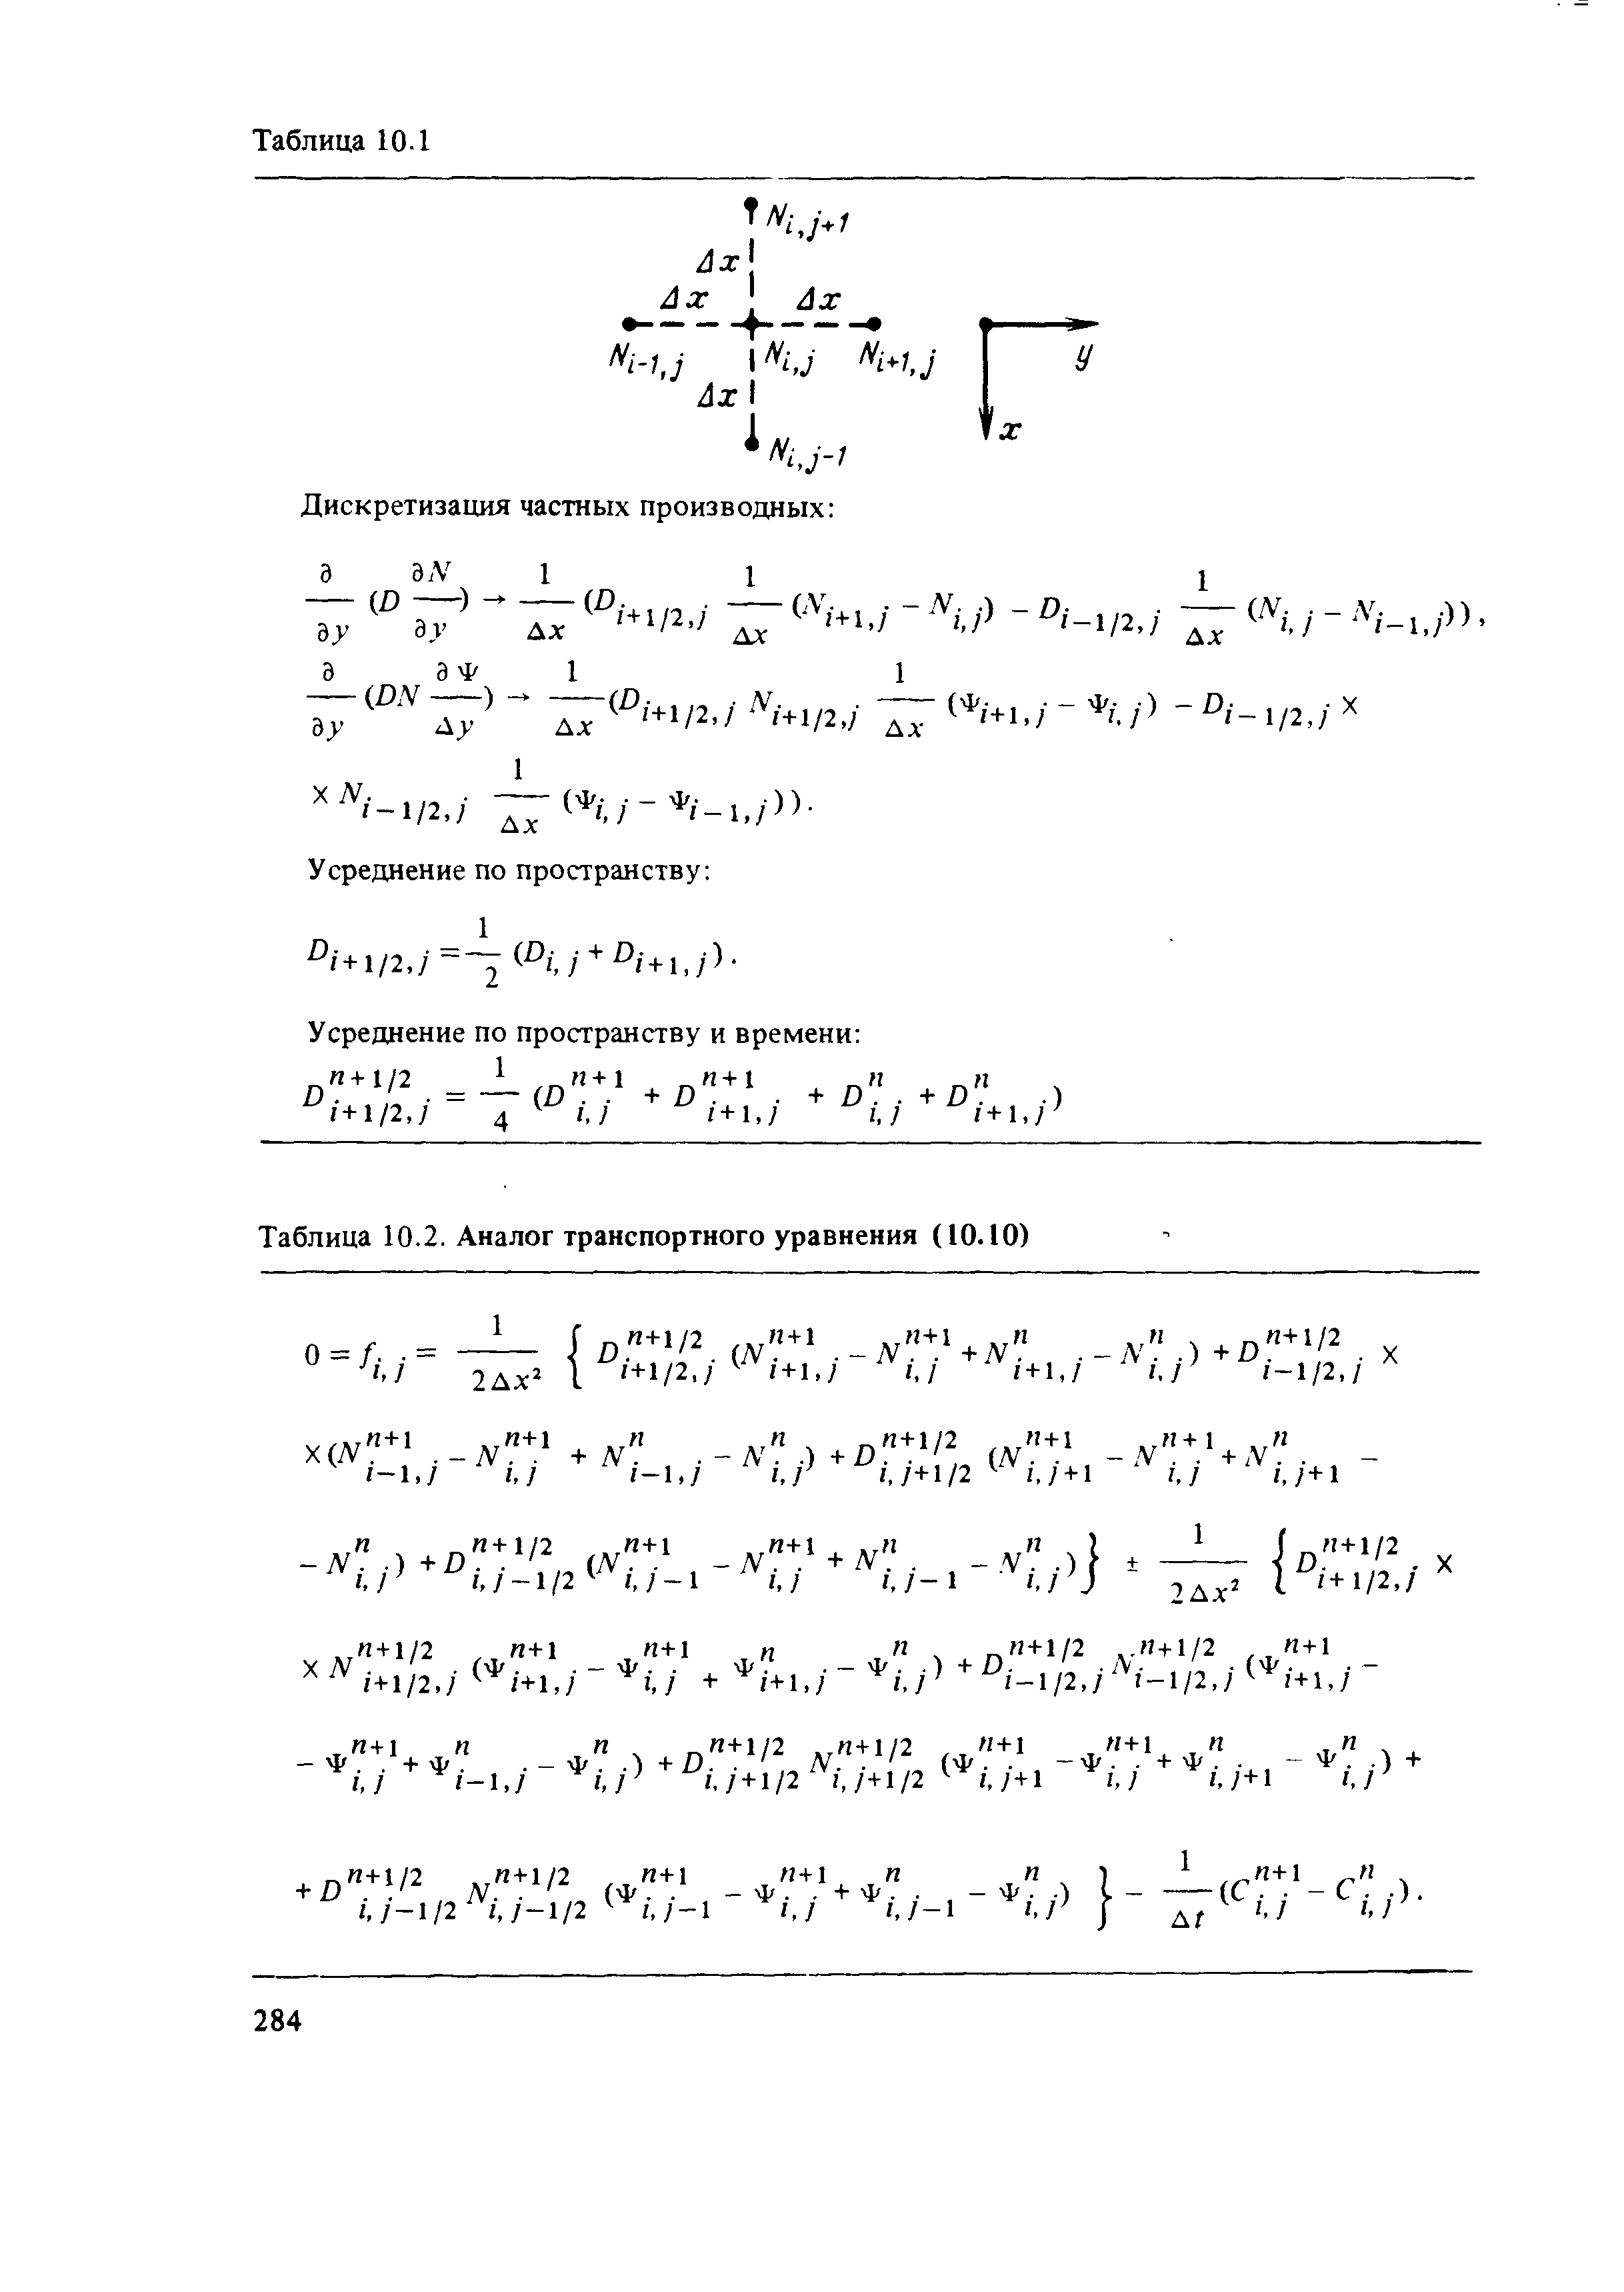 Таблица 10.2. Аналог транспортного уравнения (10.10)
